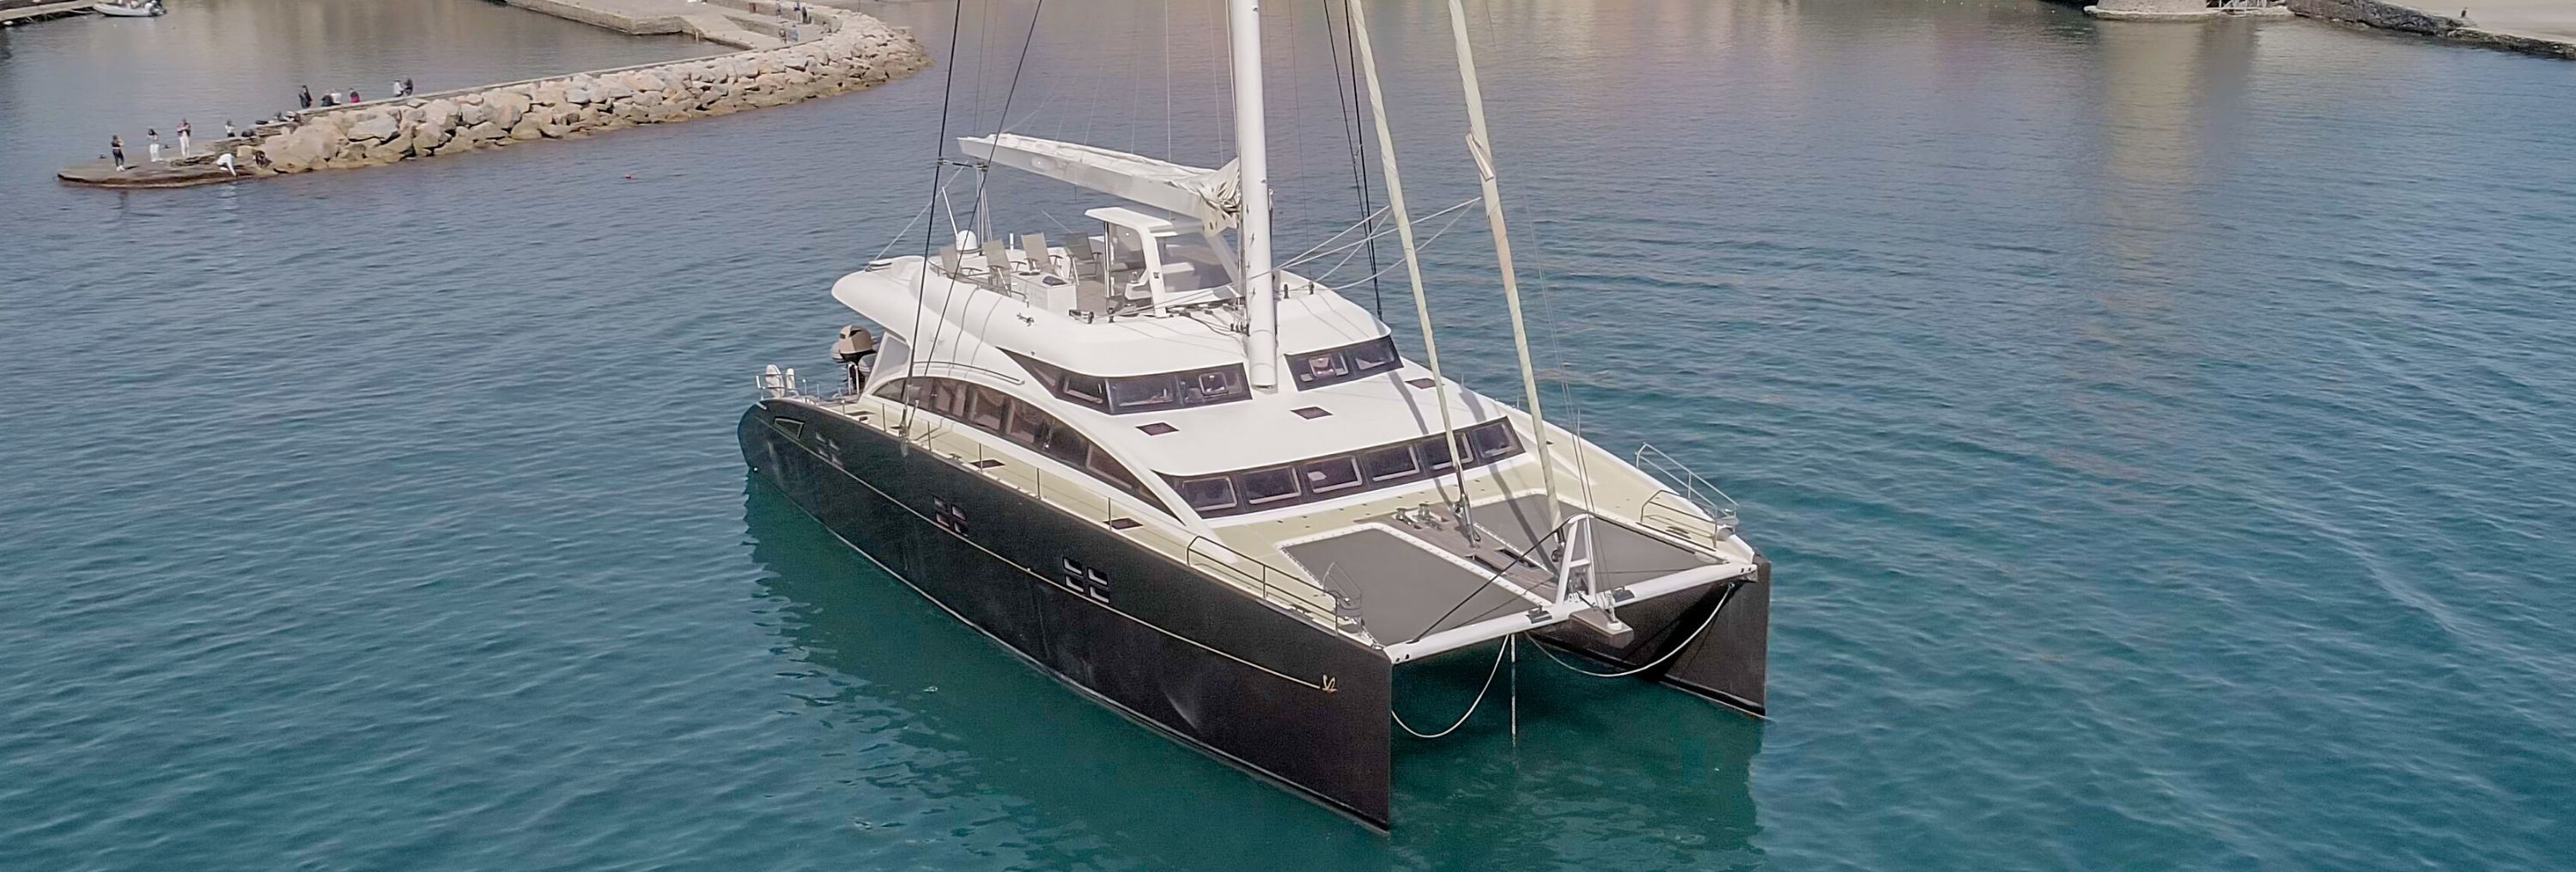 Sunreef 82 HOUBARA : Nouveau Catamaran disponible à la location